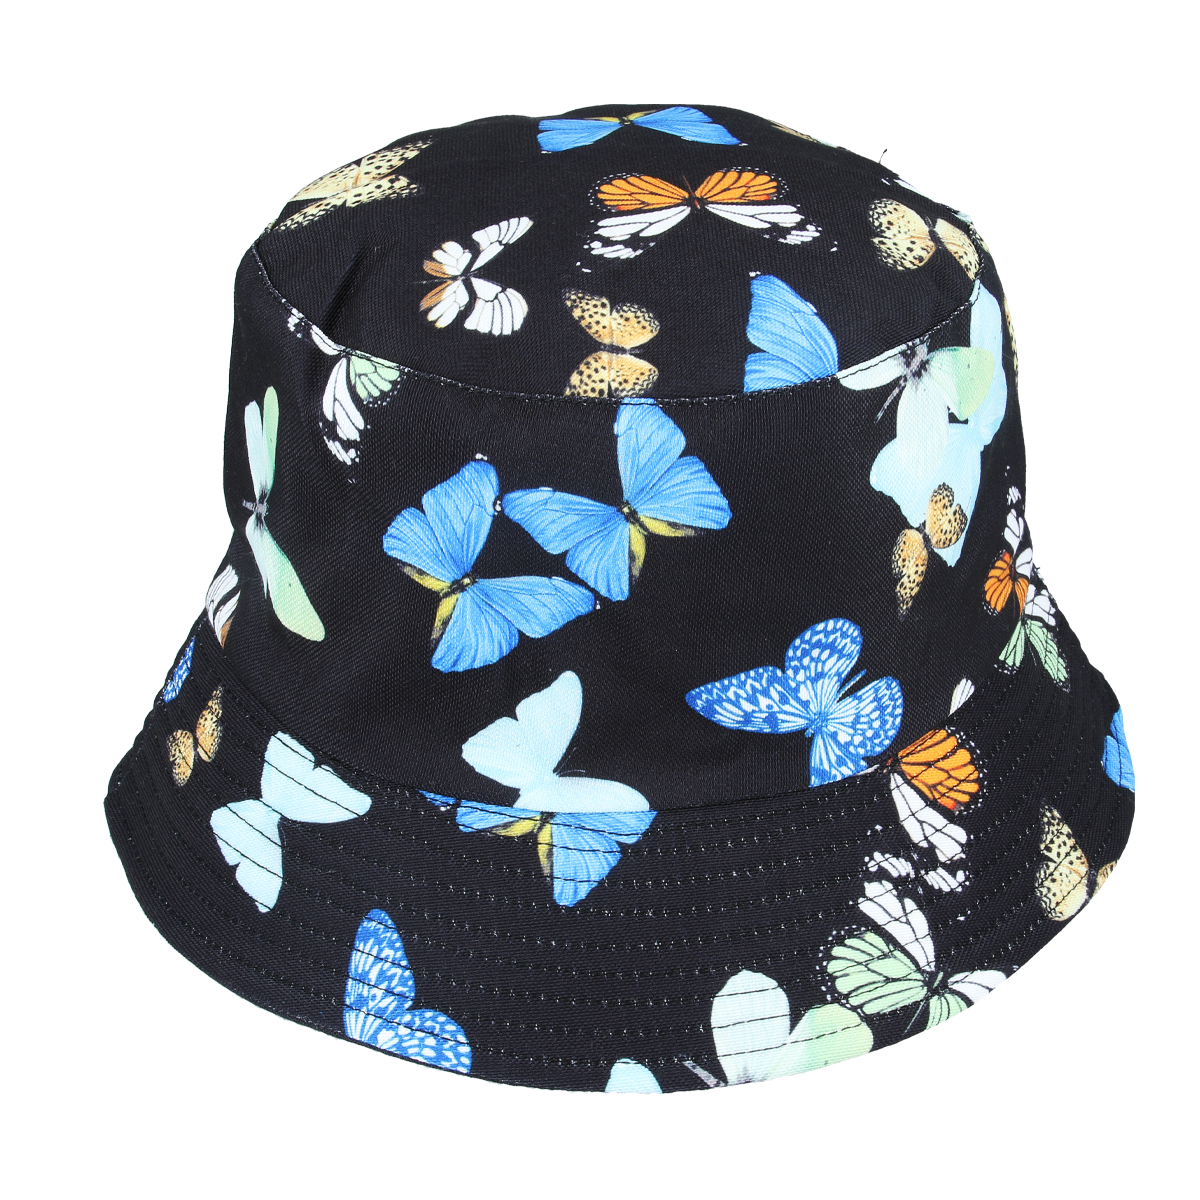 Butterfly Print Bucket Hat Sun Hat Summer Cap Reversible Black N White